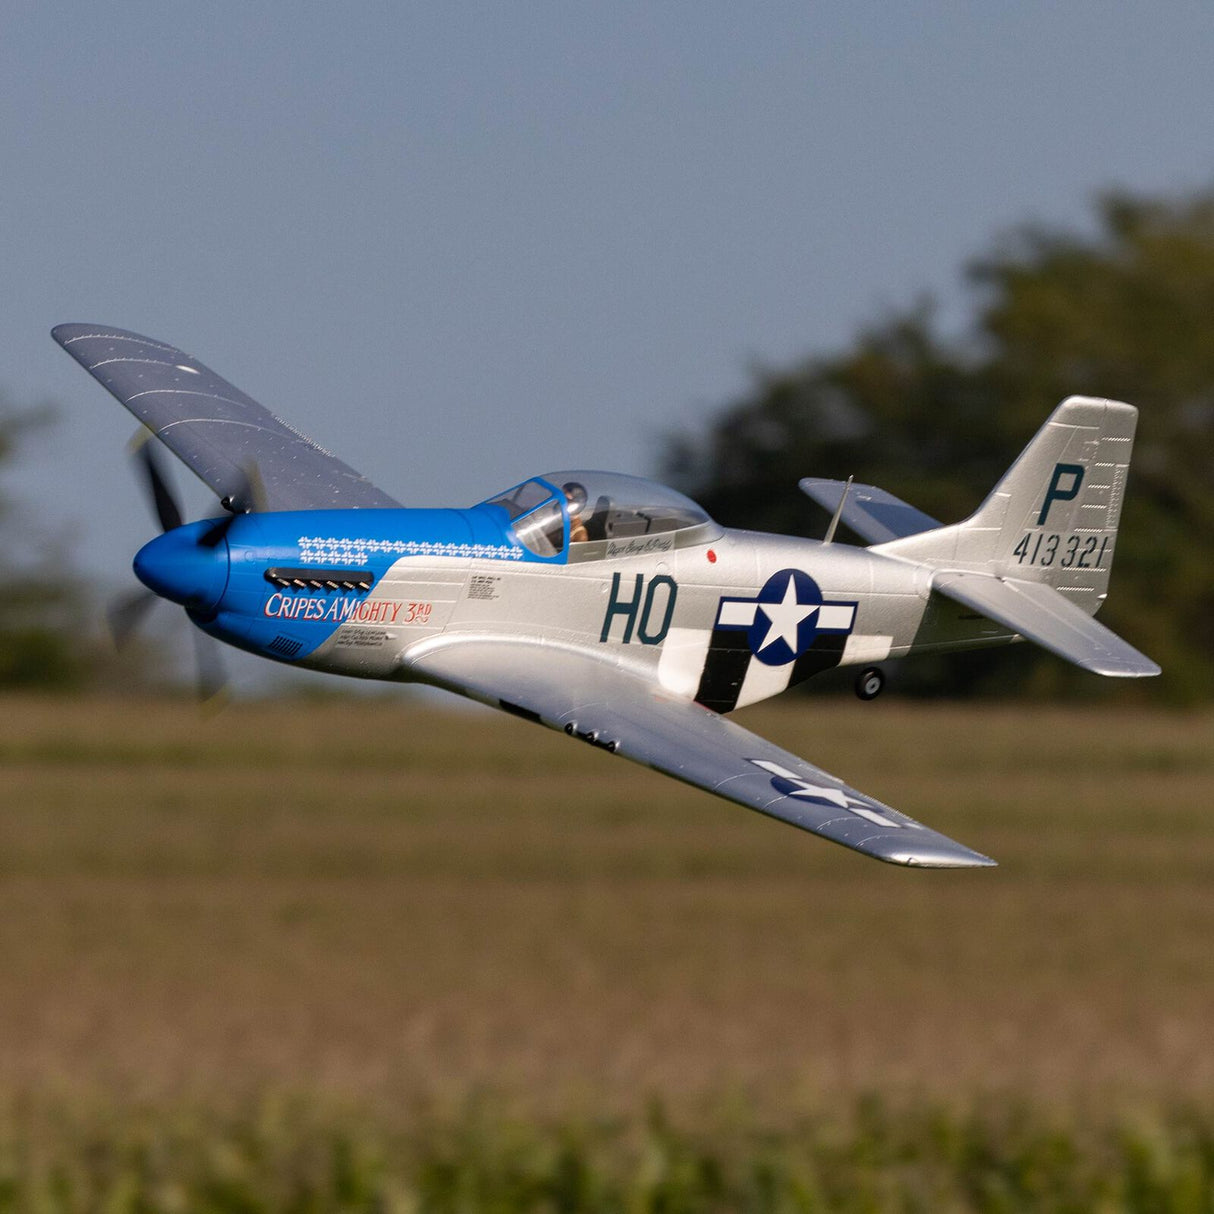 E-Flite P-51D Mustang 1.2m with SAFE Select, BNF Basic, EFL089500 - Hobbytech Toys